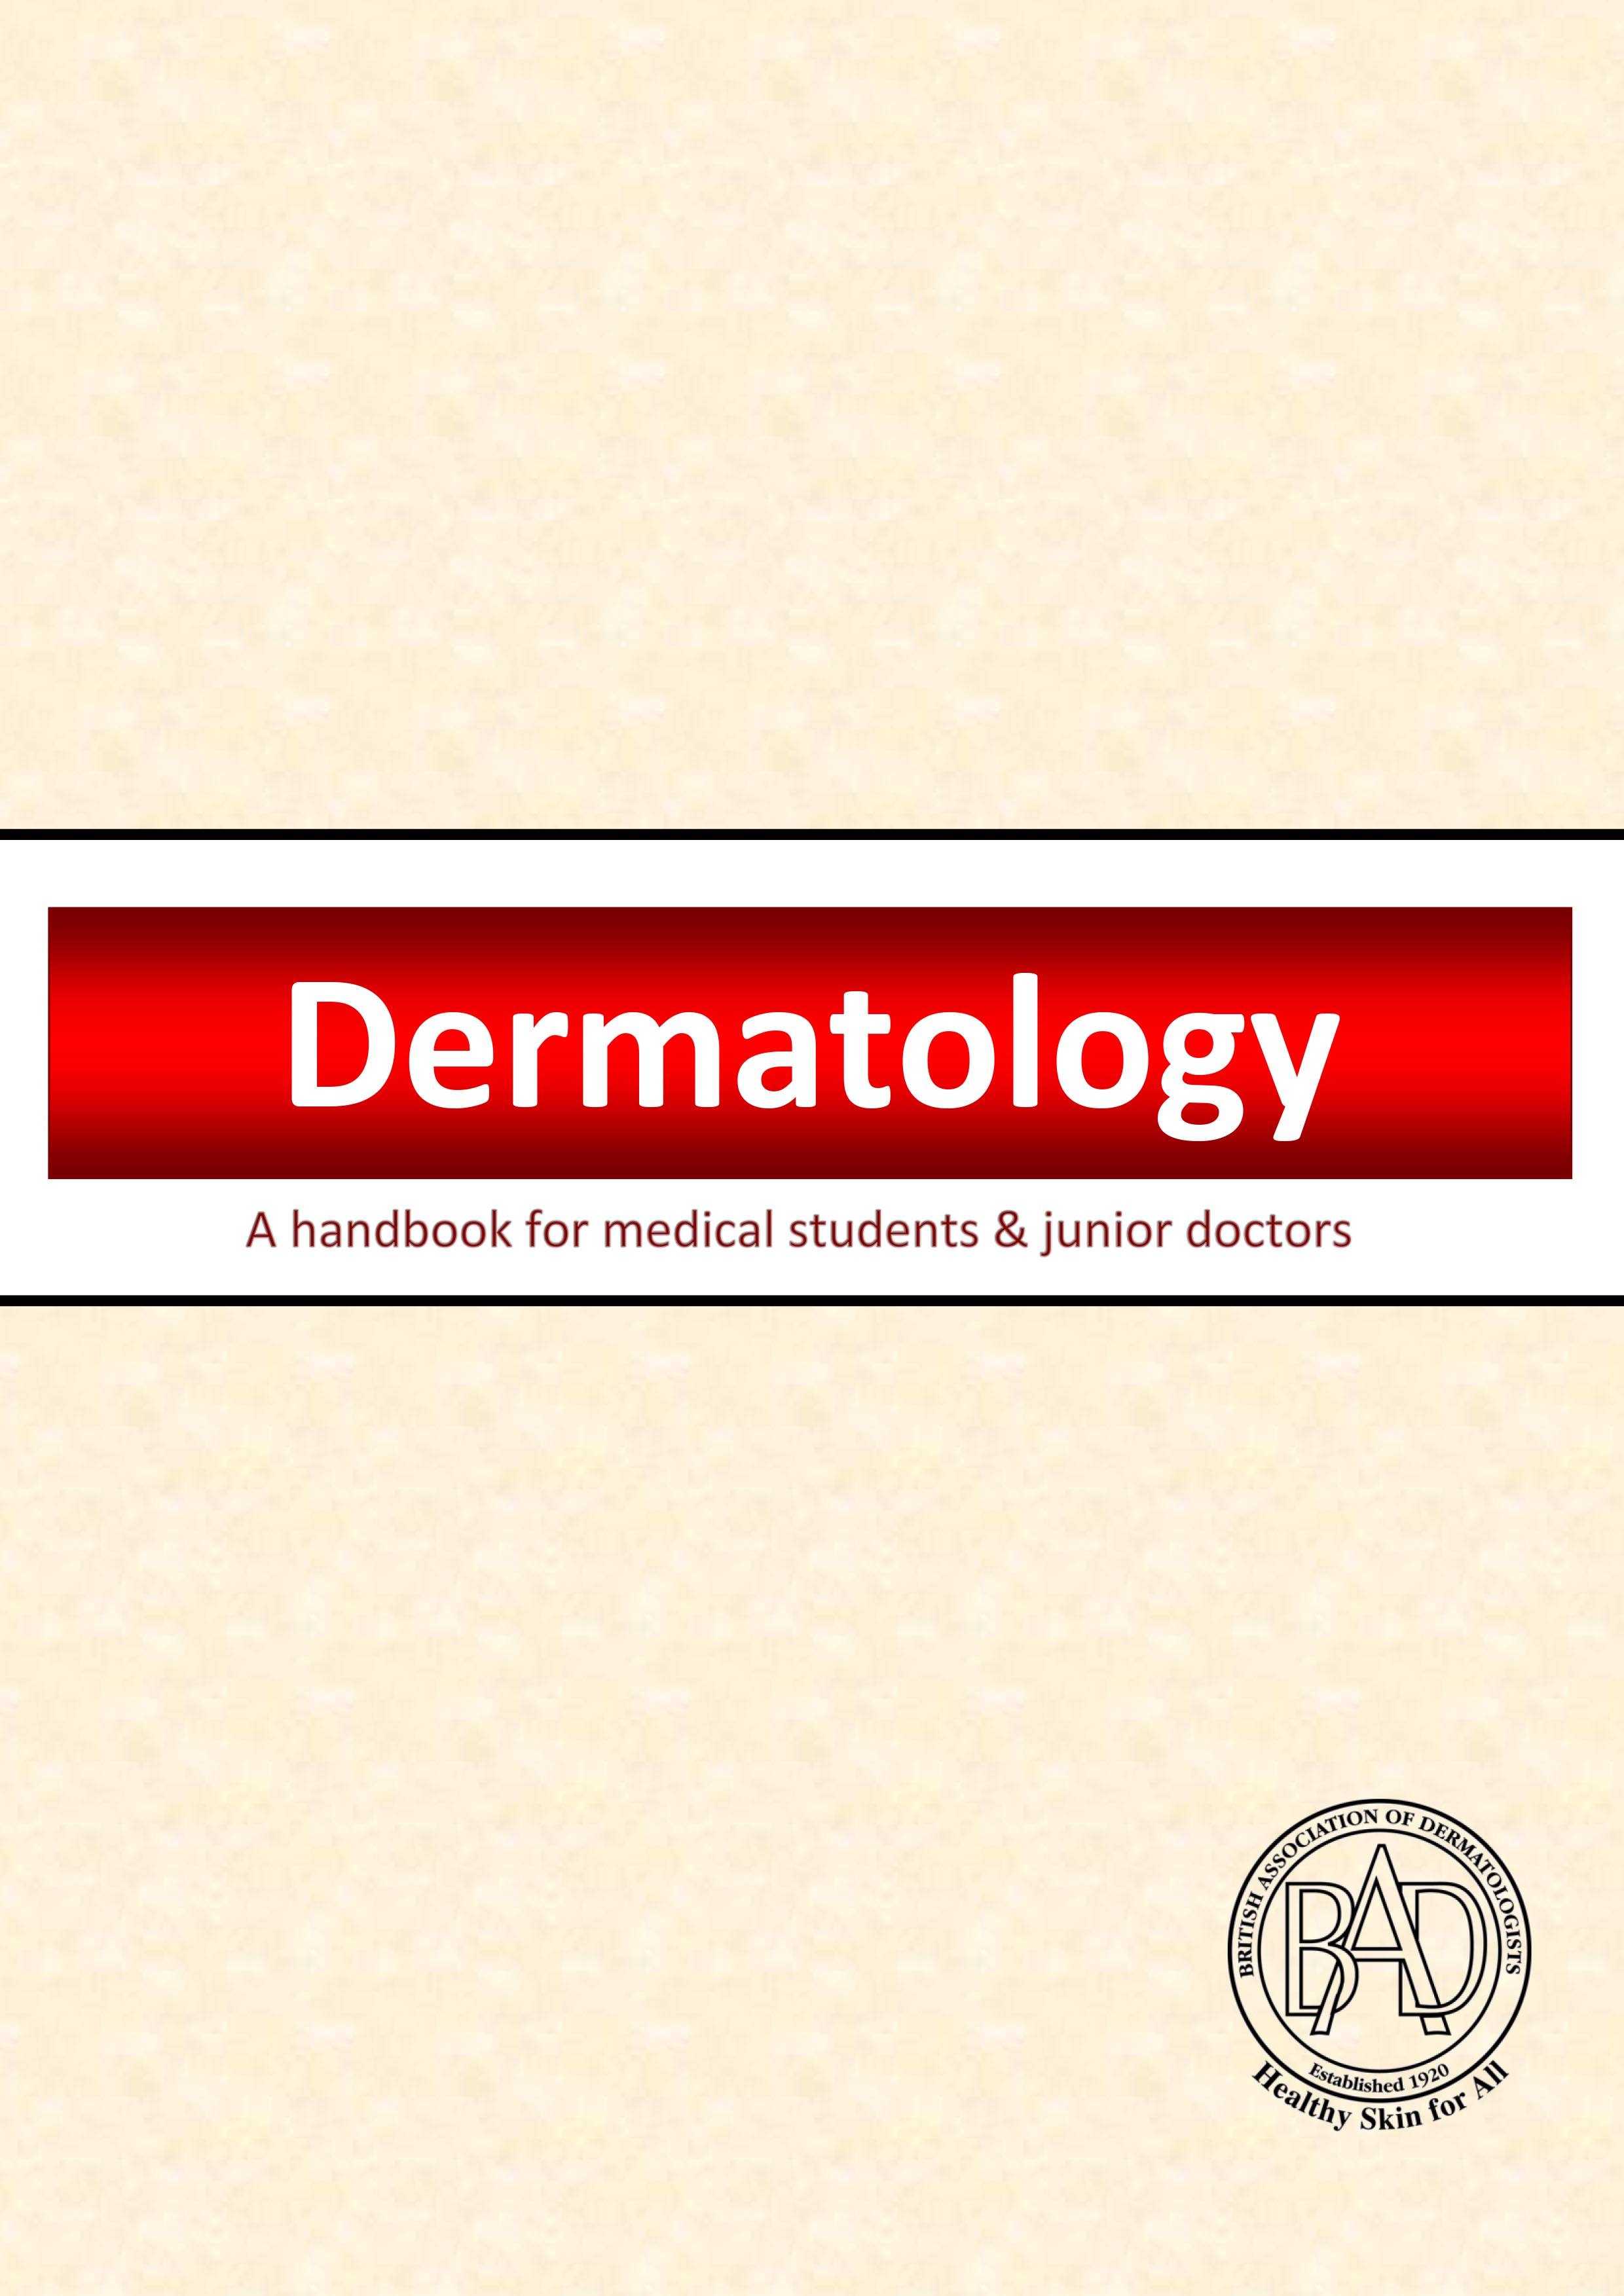 Dermatology Handbook 3e 2020